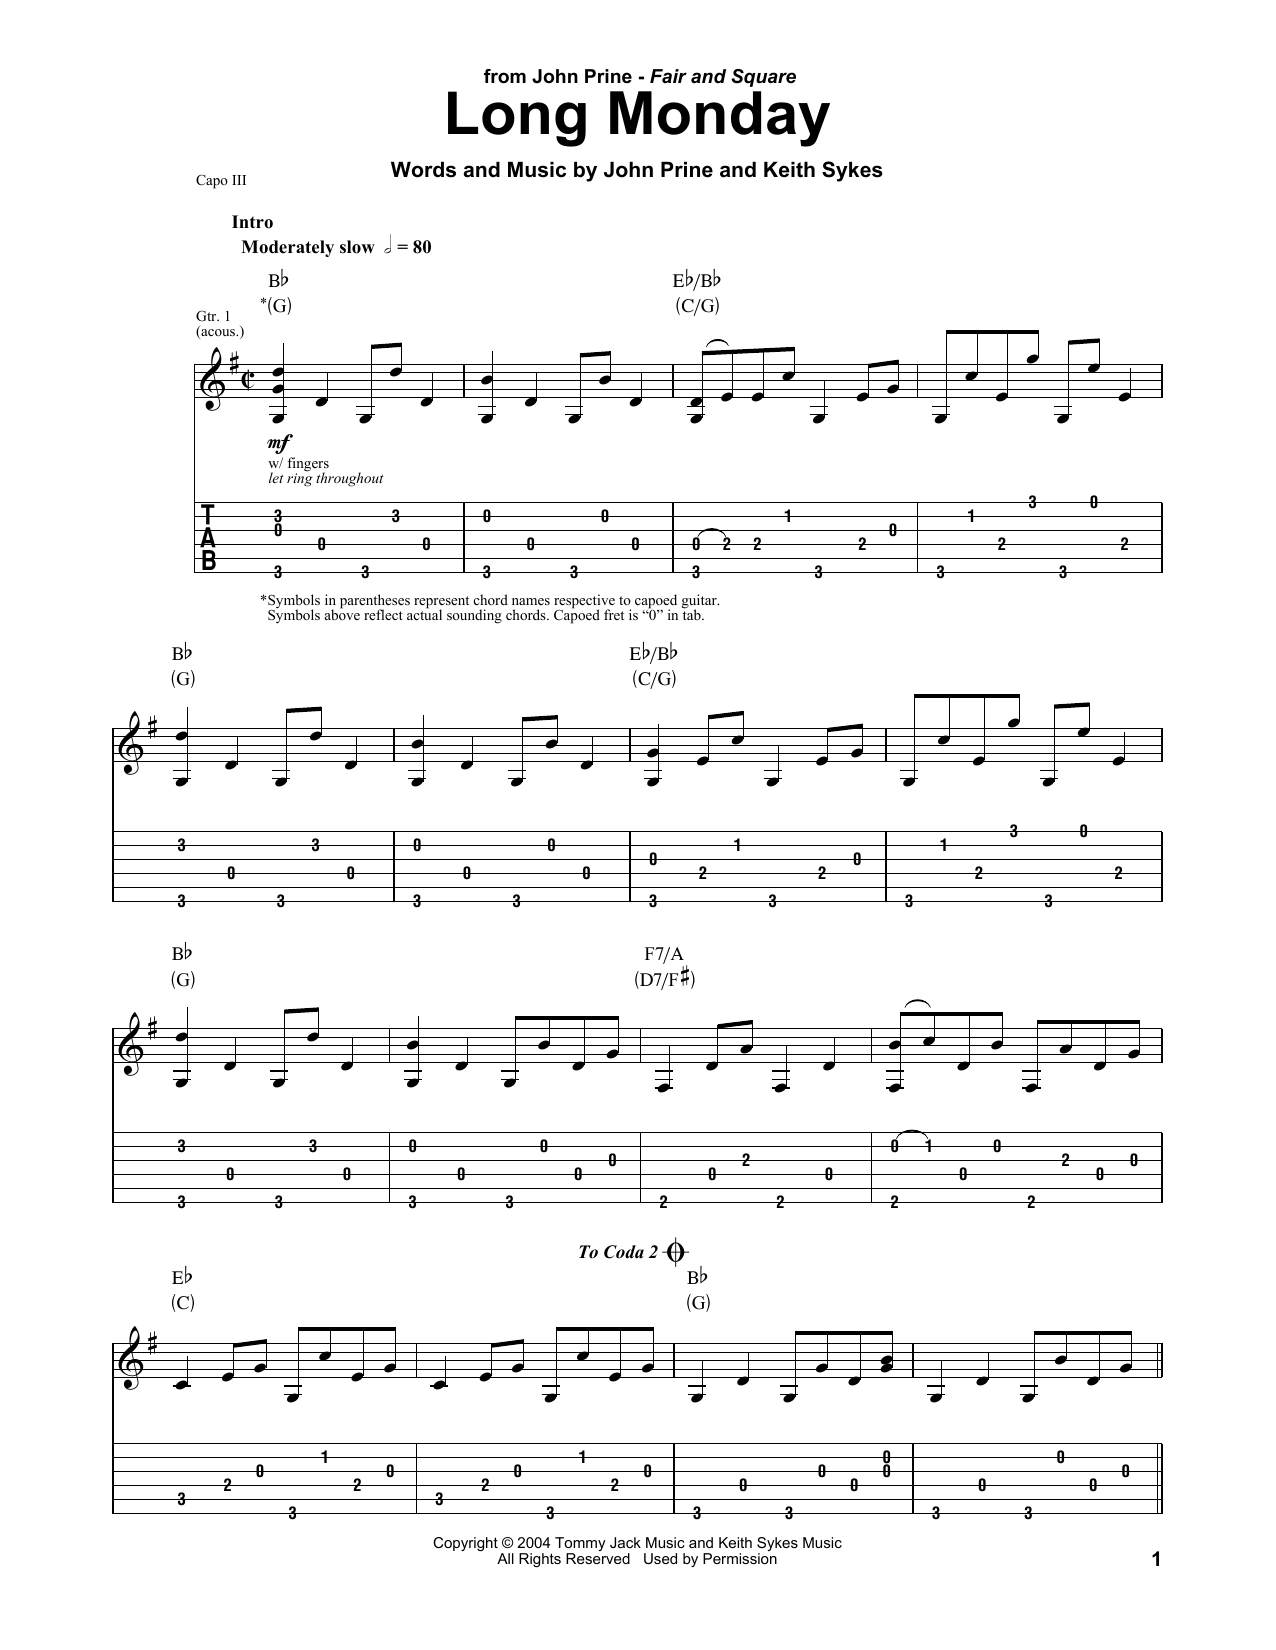 John Prine Long Monday Sheet Music Notes & Chords for Guitar Tab Play-Along - Download or Print PDF